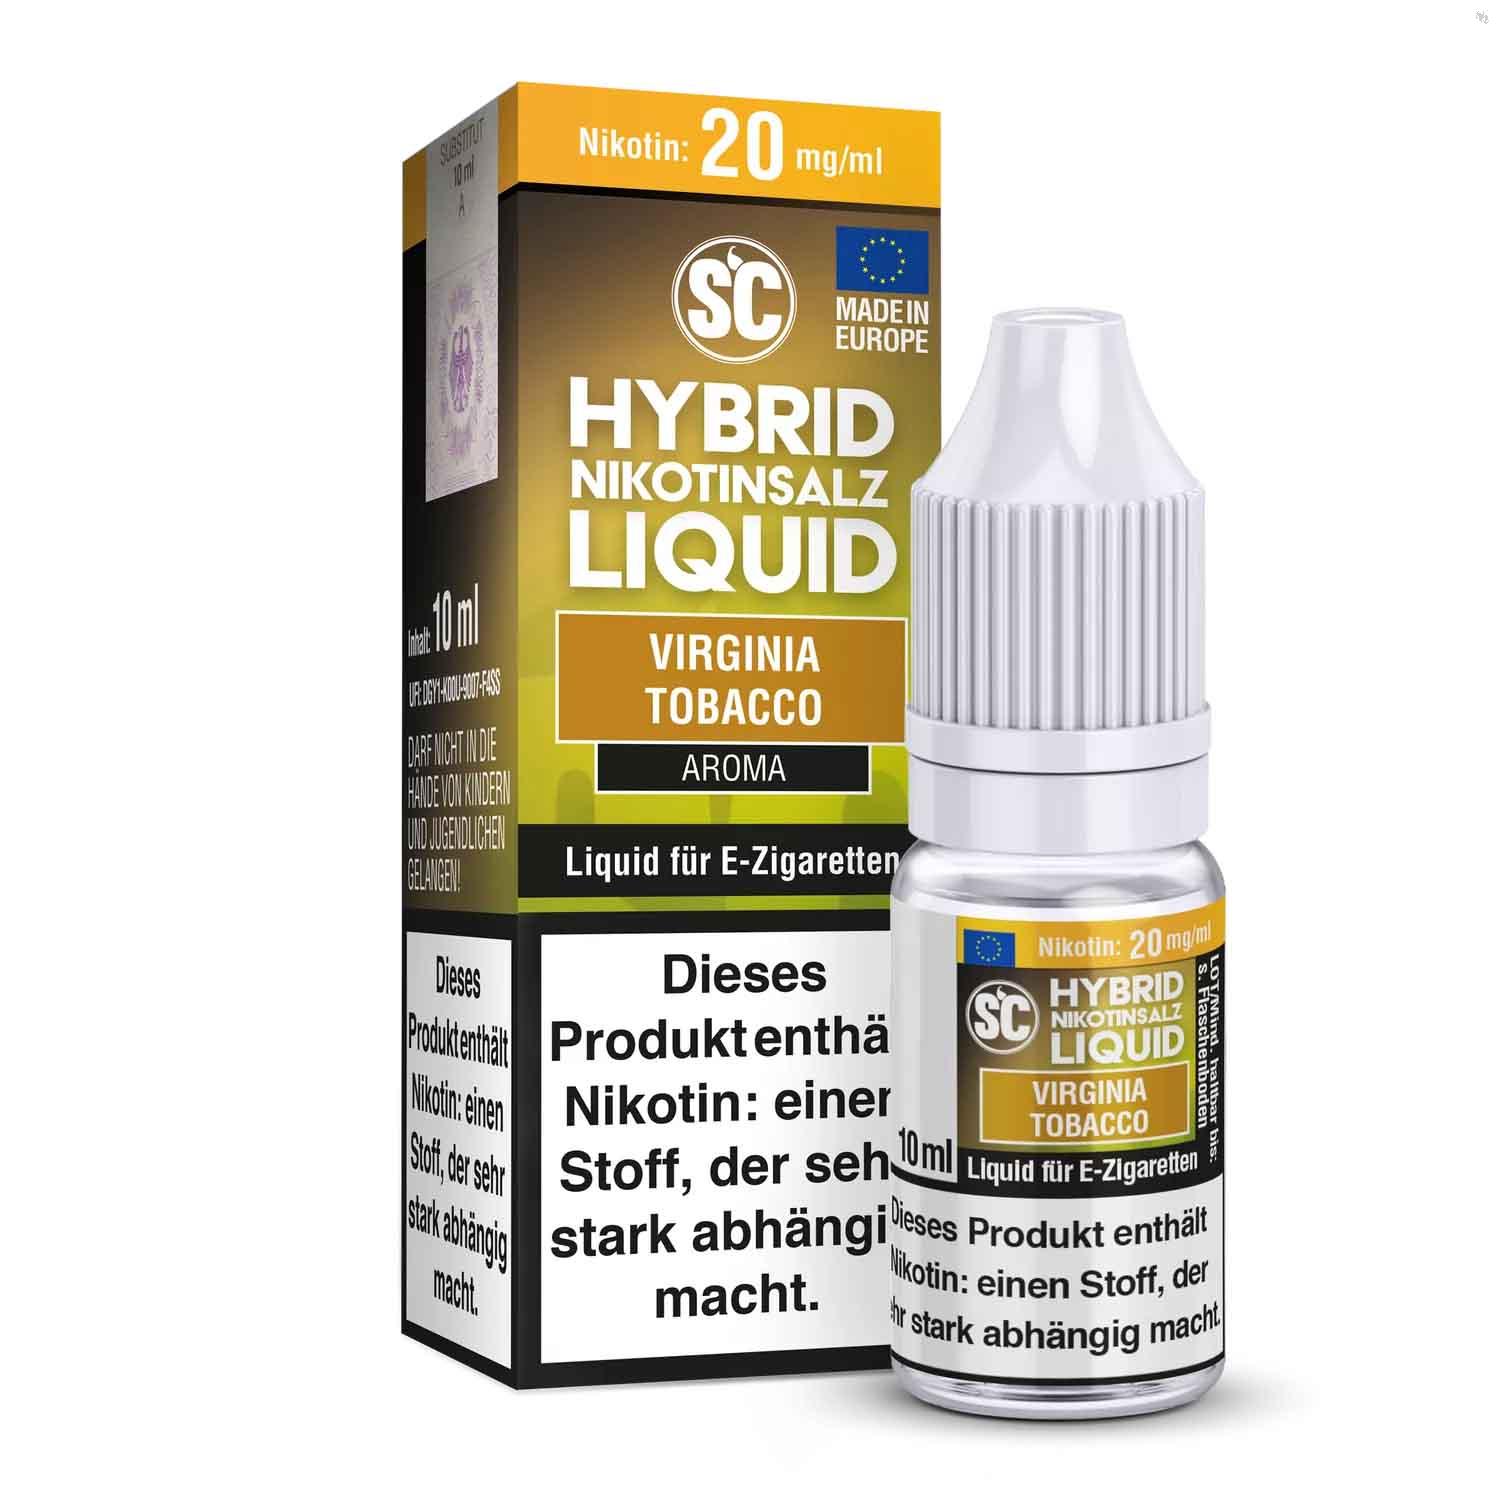 SC - Virginia Tobacco Hybrid Nikotinsalz Liquid ✅ Günstig kaufen! 